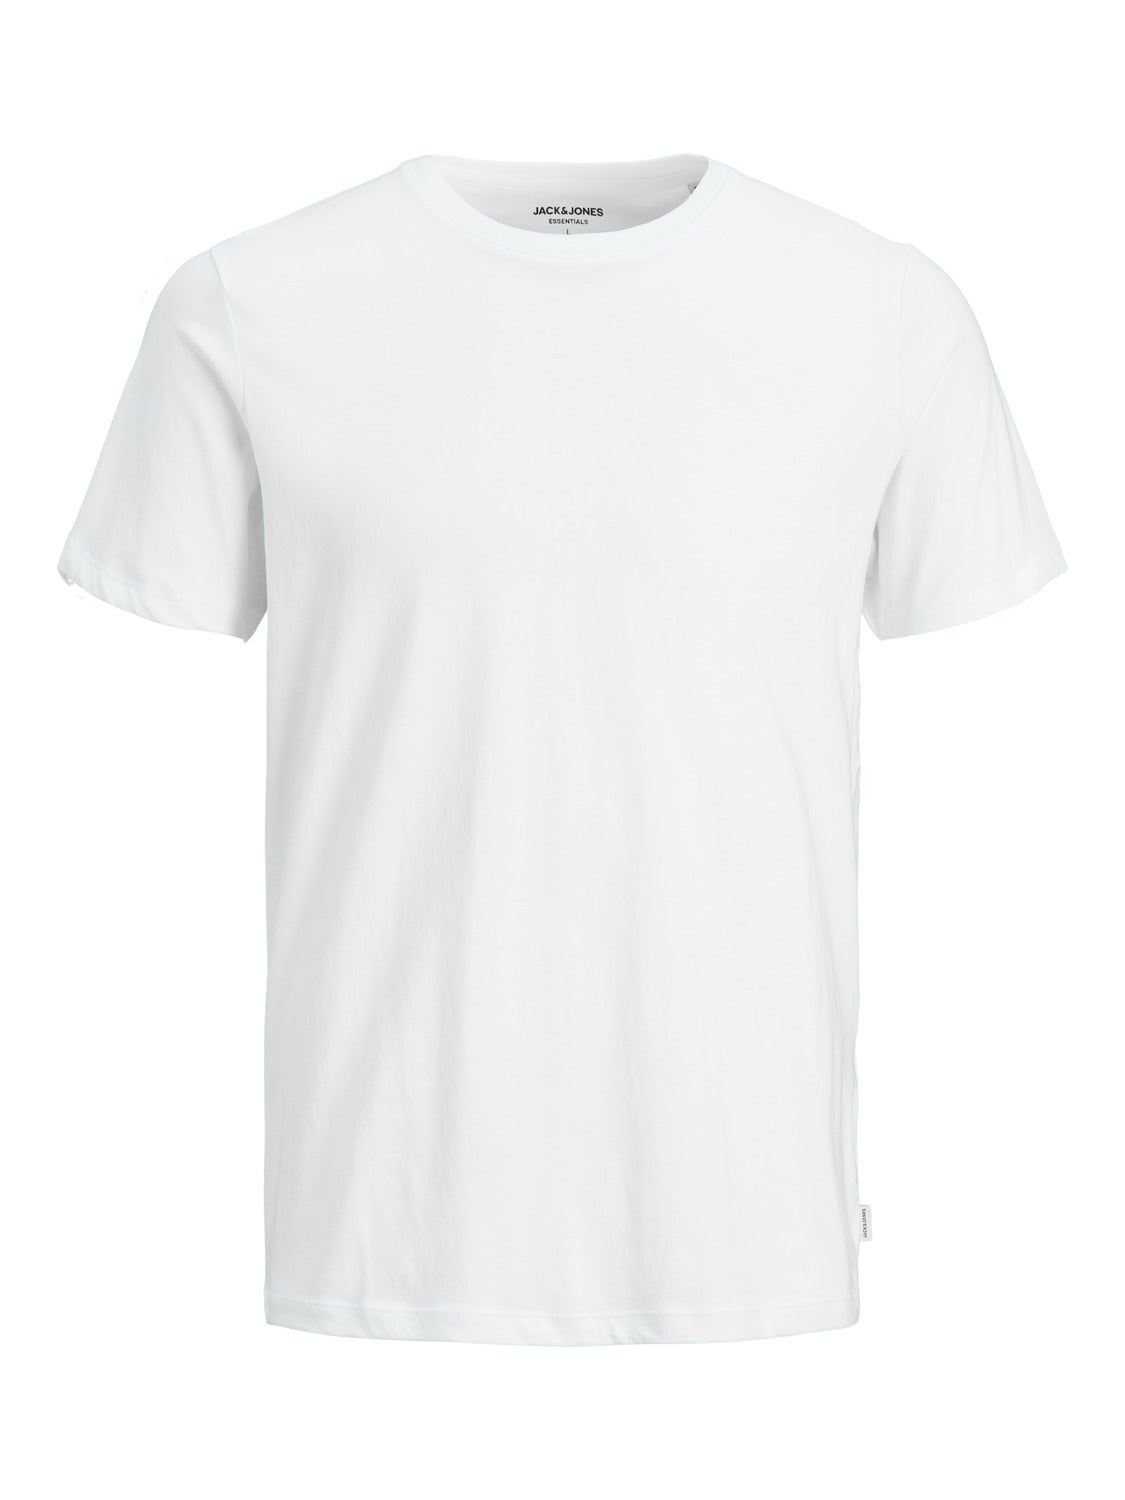 & Jack | Plain Crew | Jones® T-shirt White neck